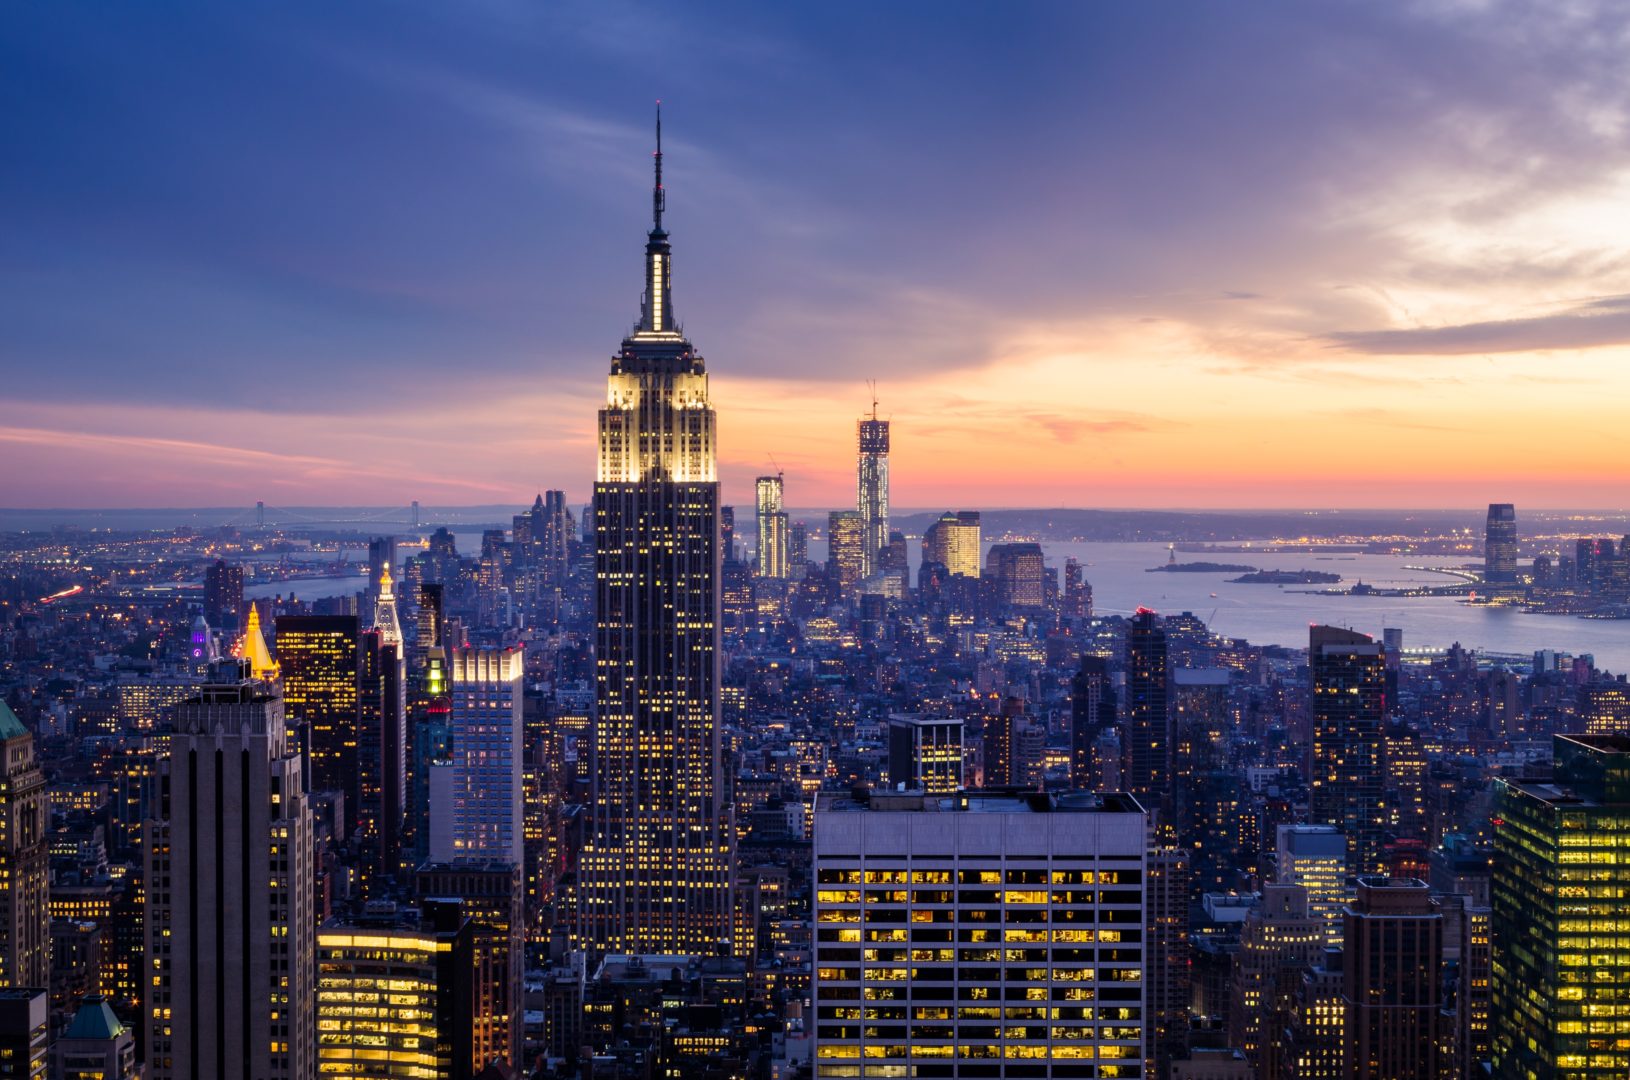 Visiter New York et voir l'Empire State Building